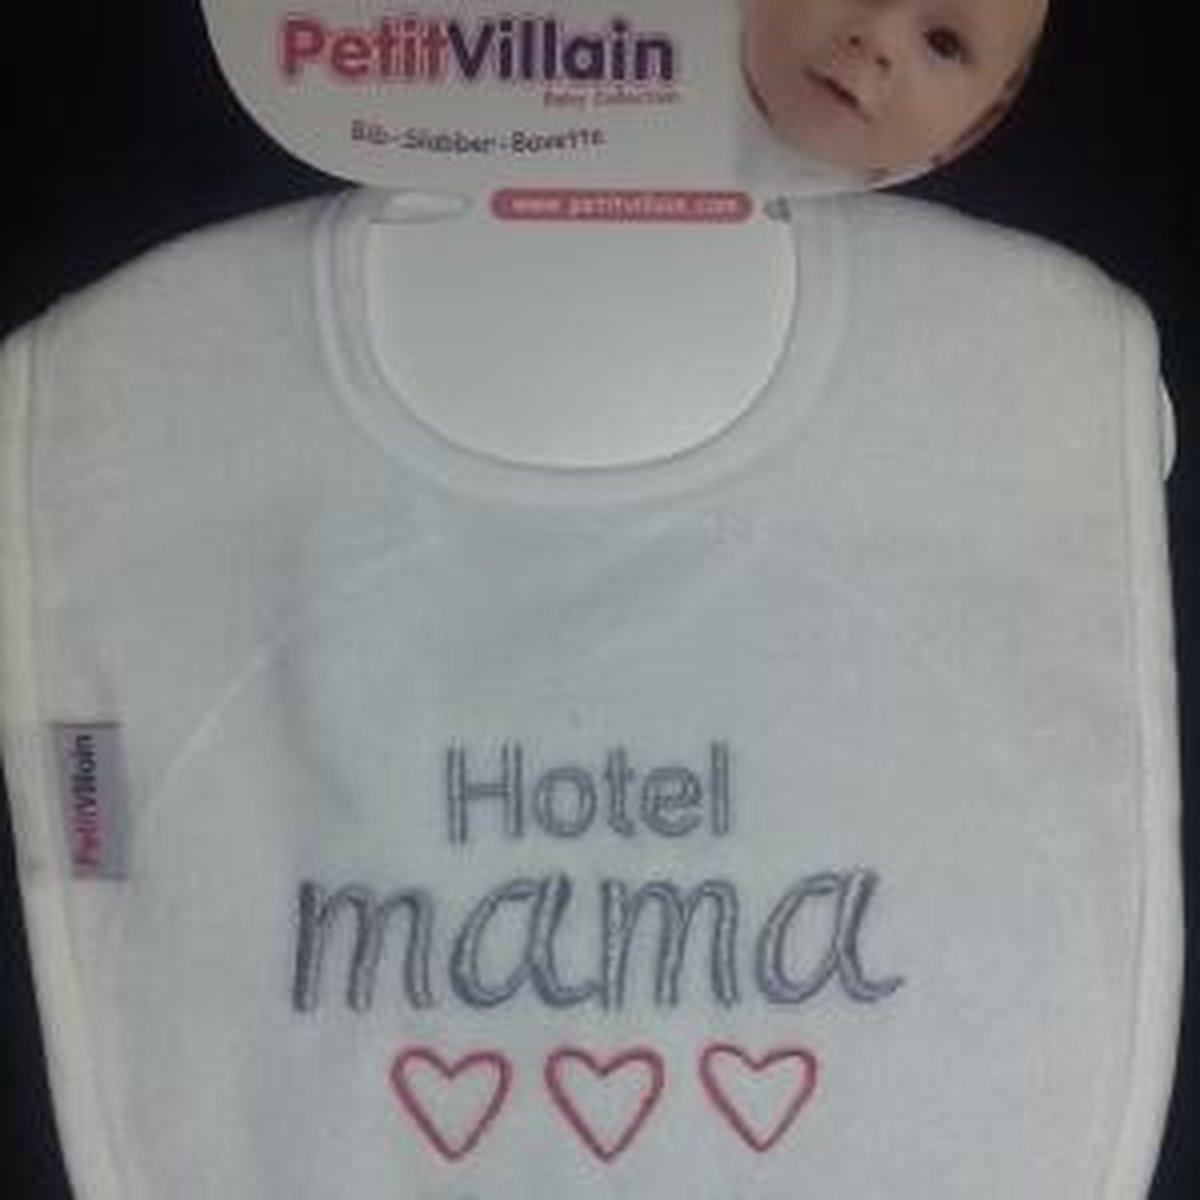 Petit villain slab - Hotel mama (hartje)(hartje)(hartje) always open